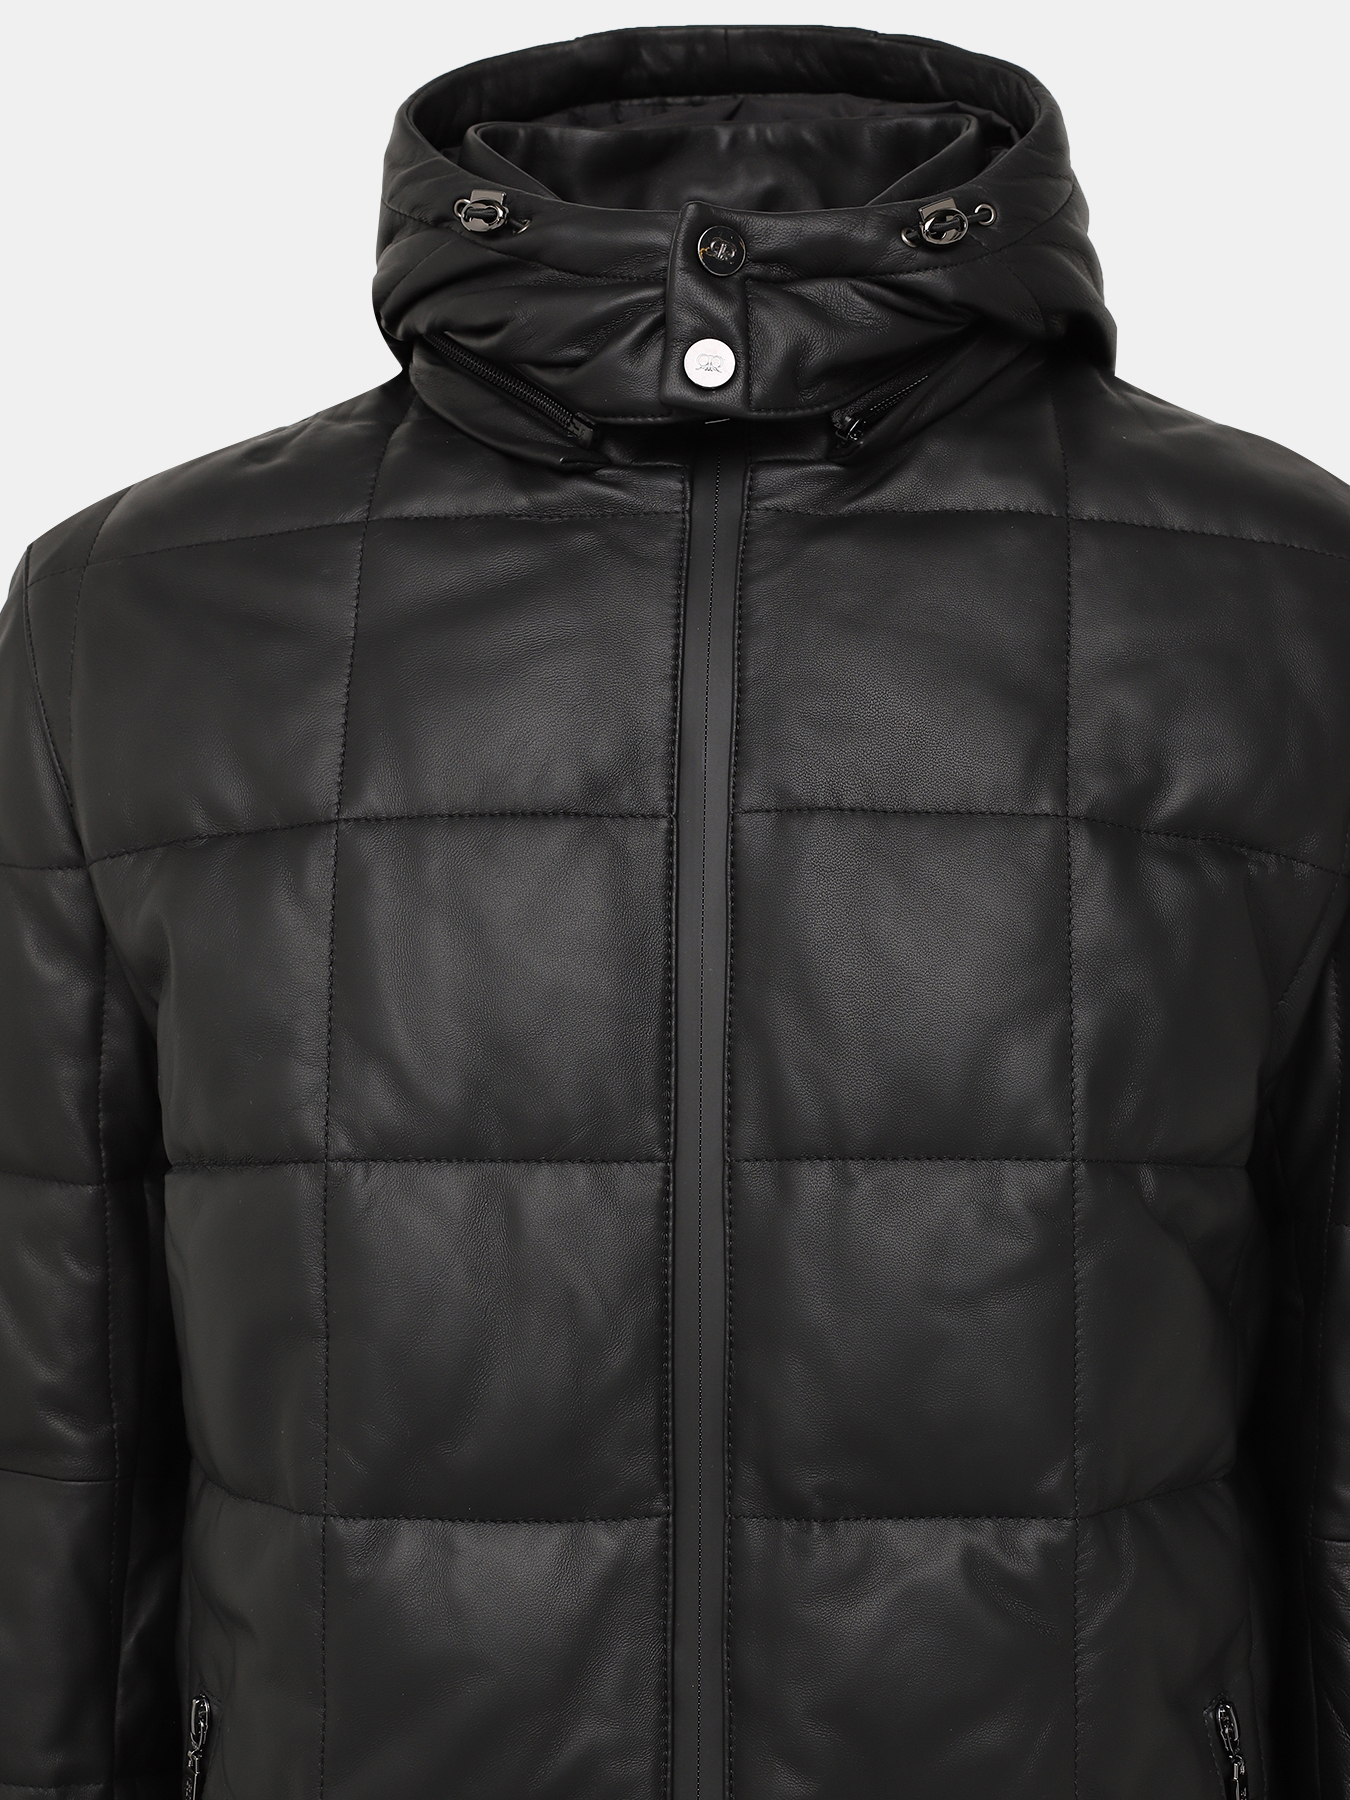 Кожаная куртка Ritter 390994-025, цвет черный, размер 48 - фото 6